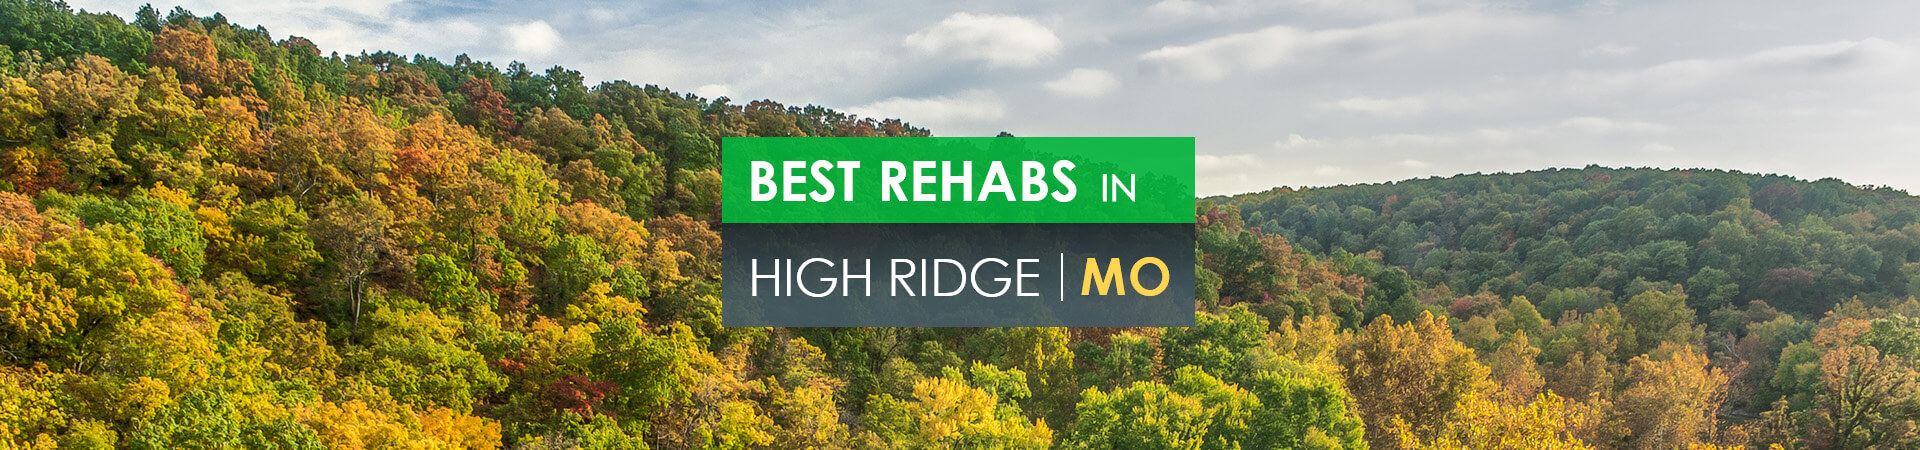 Best rehabs in High Ridge, MO